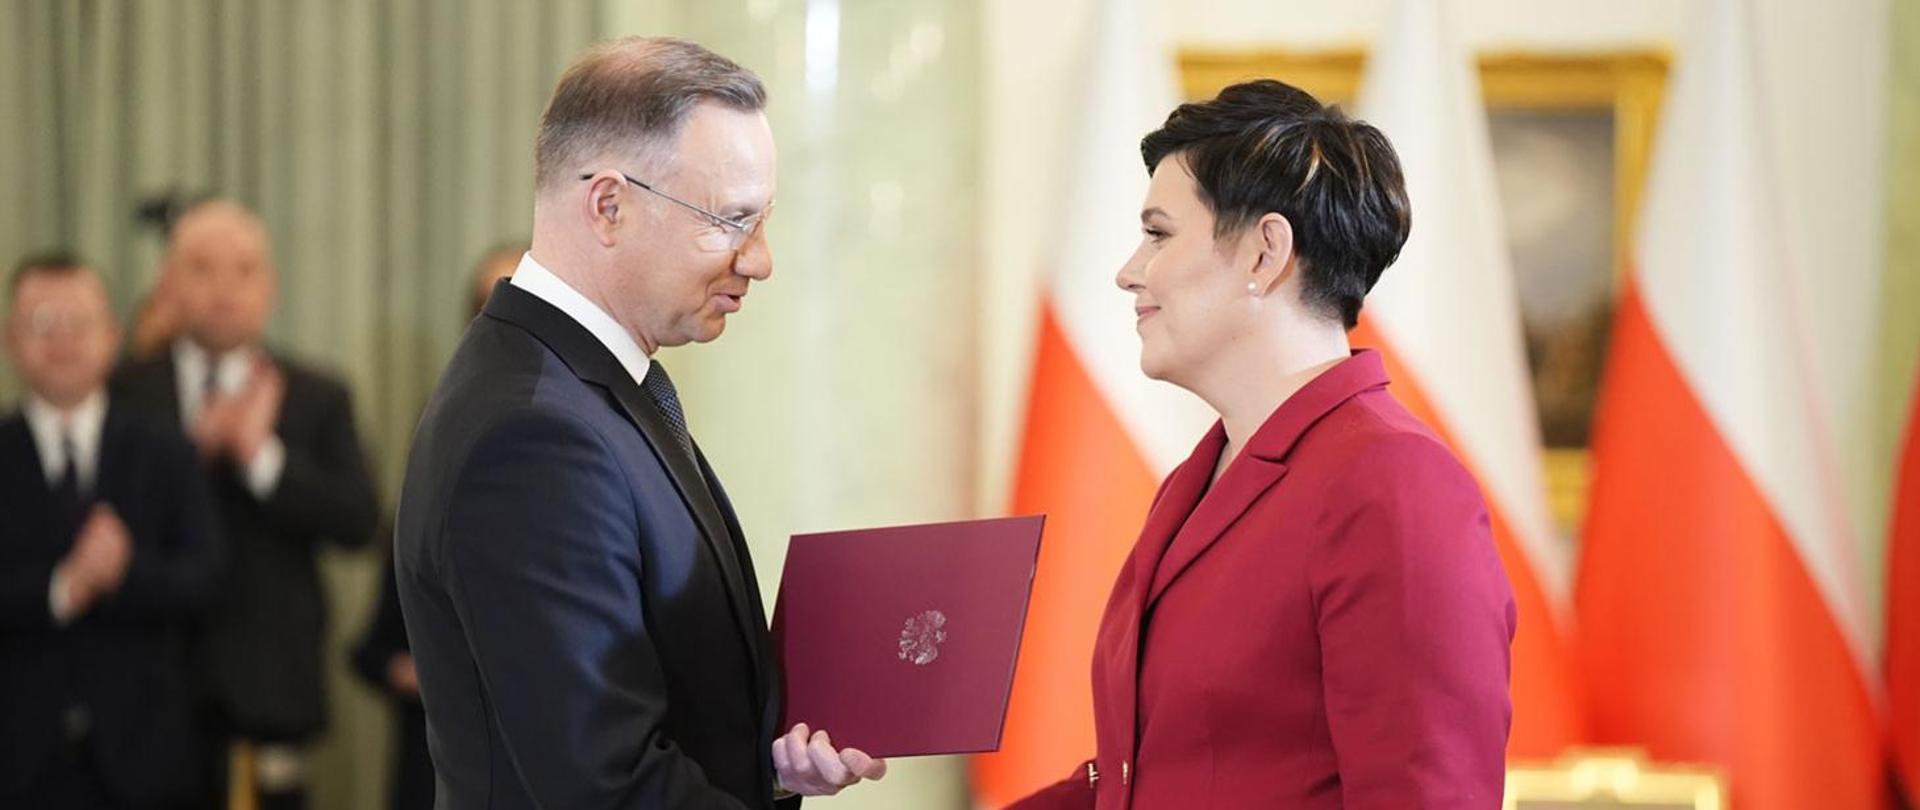 Dorota Bojemska – new Minister of Family and Social Policy